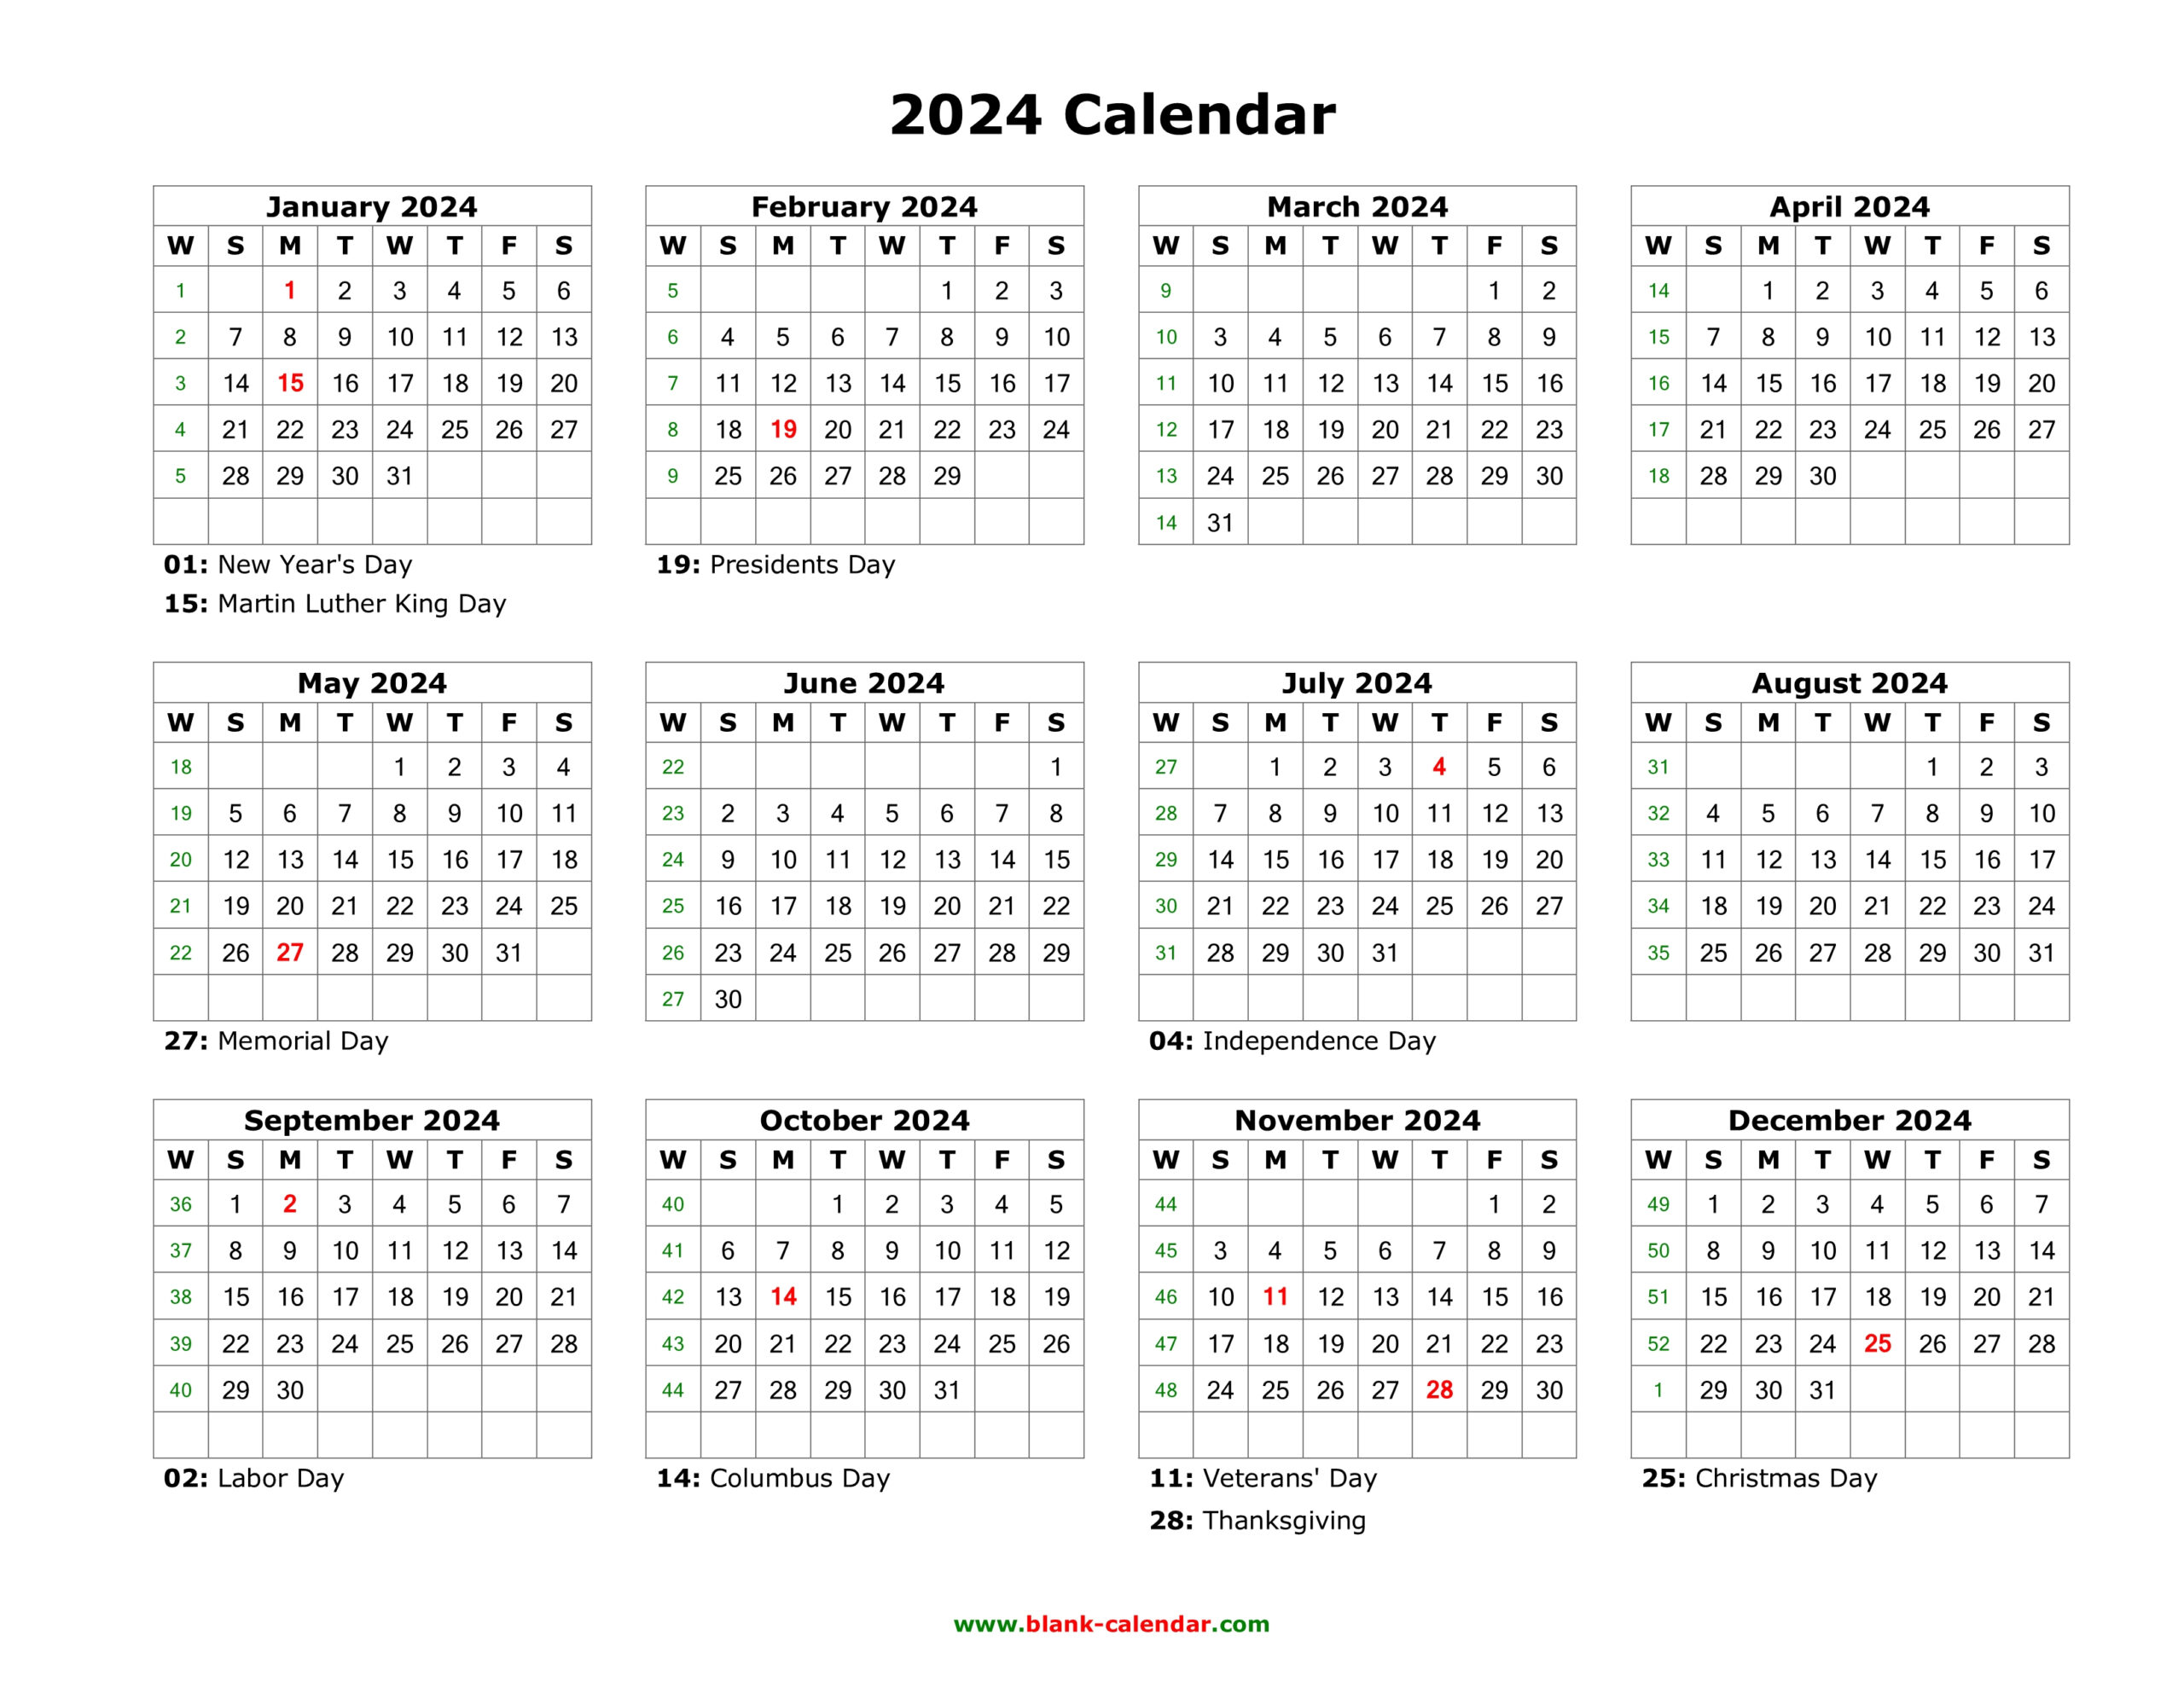 Blank Calendar 2024 | Free Download Calendar Templates for 2024 Calendar Printable No Download